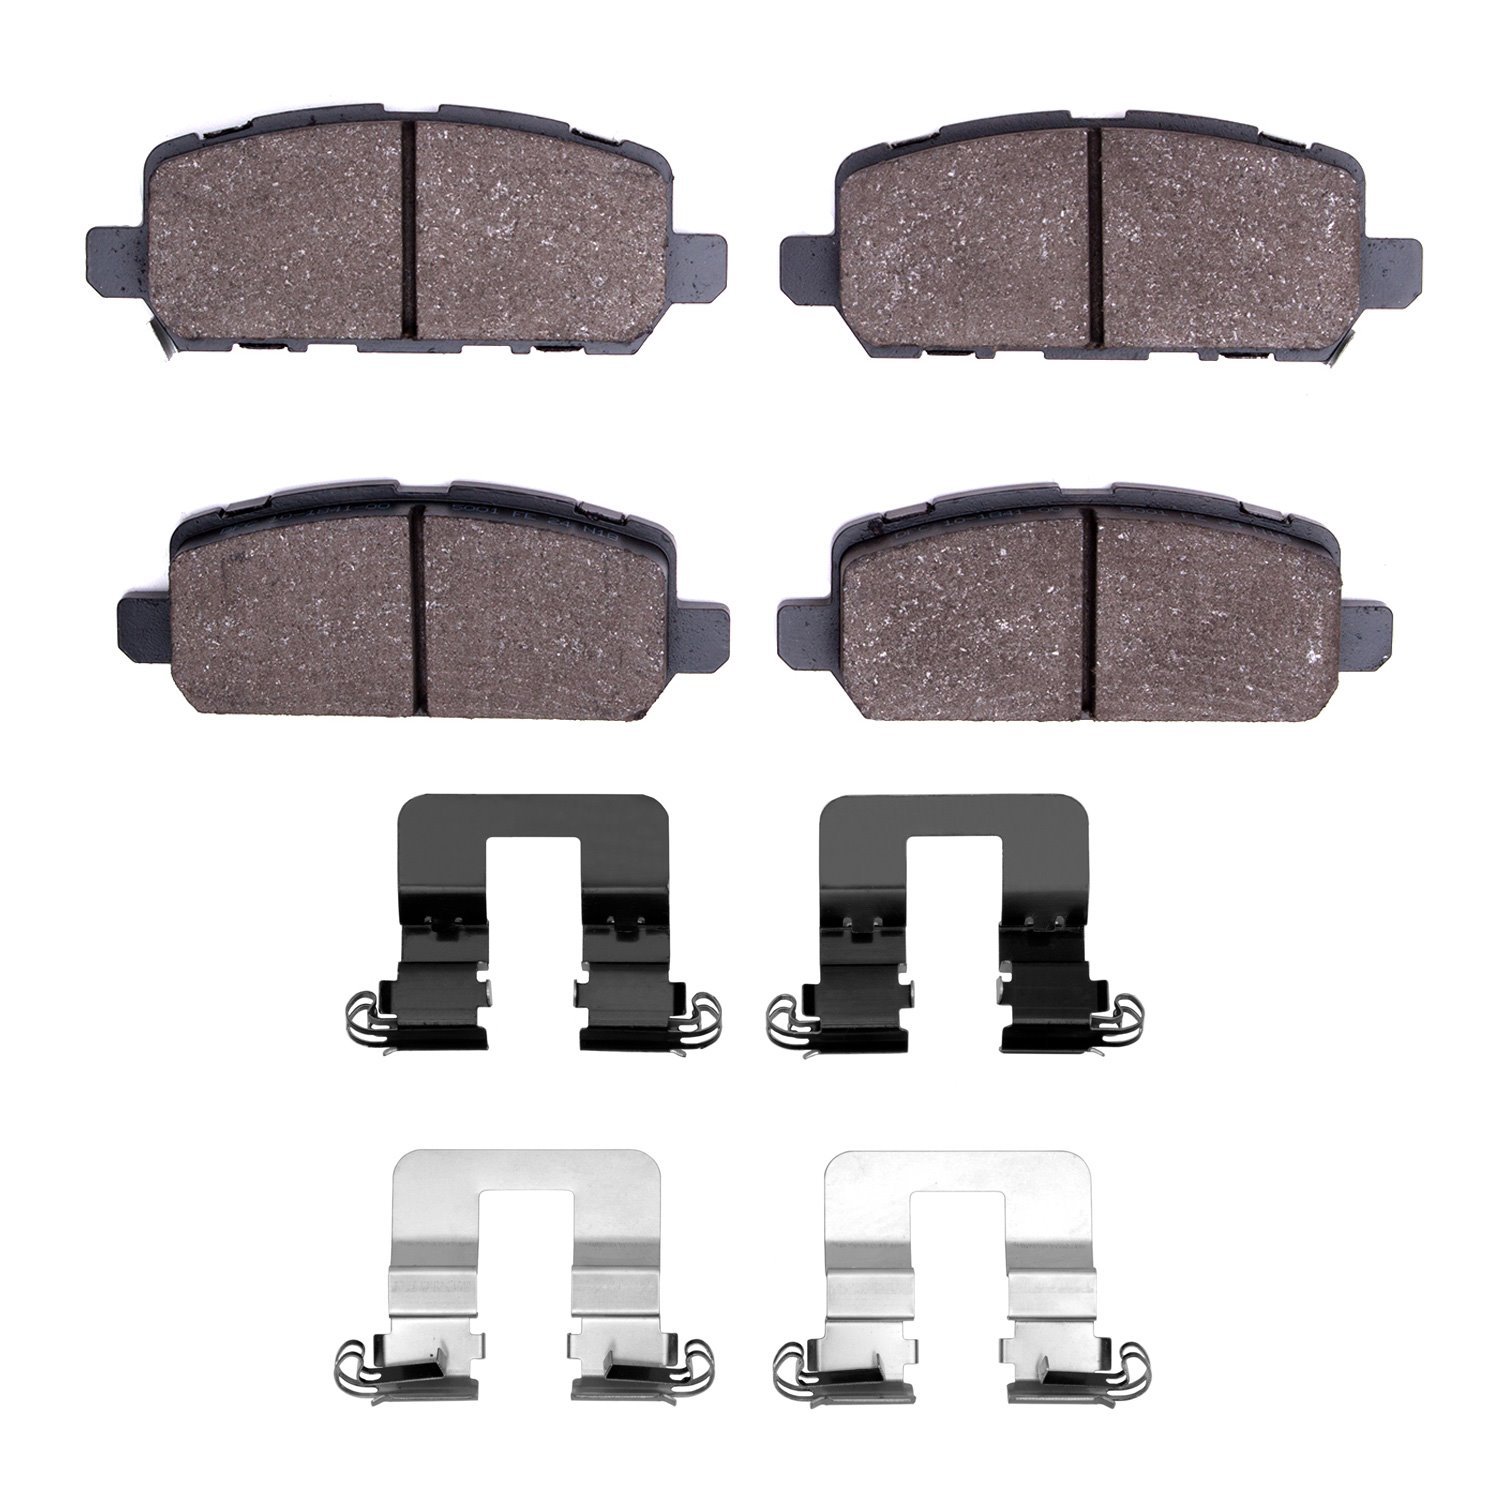 1310-1841-01 3000-Series Ceramic Brake Pads & Hardware Kit, Fits Select Acura/Honda, Position: Rear